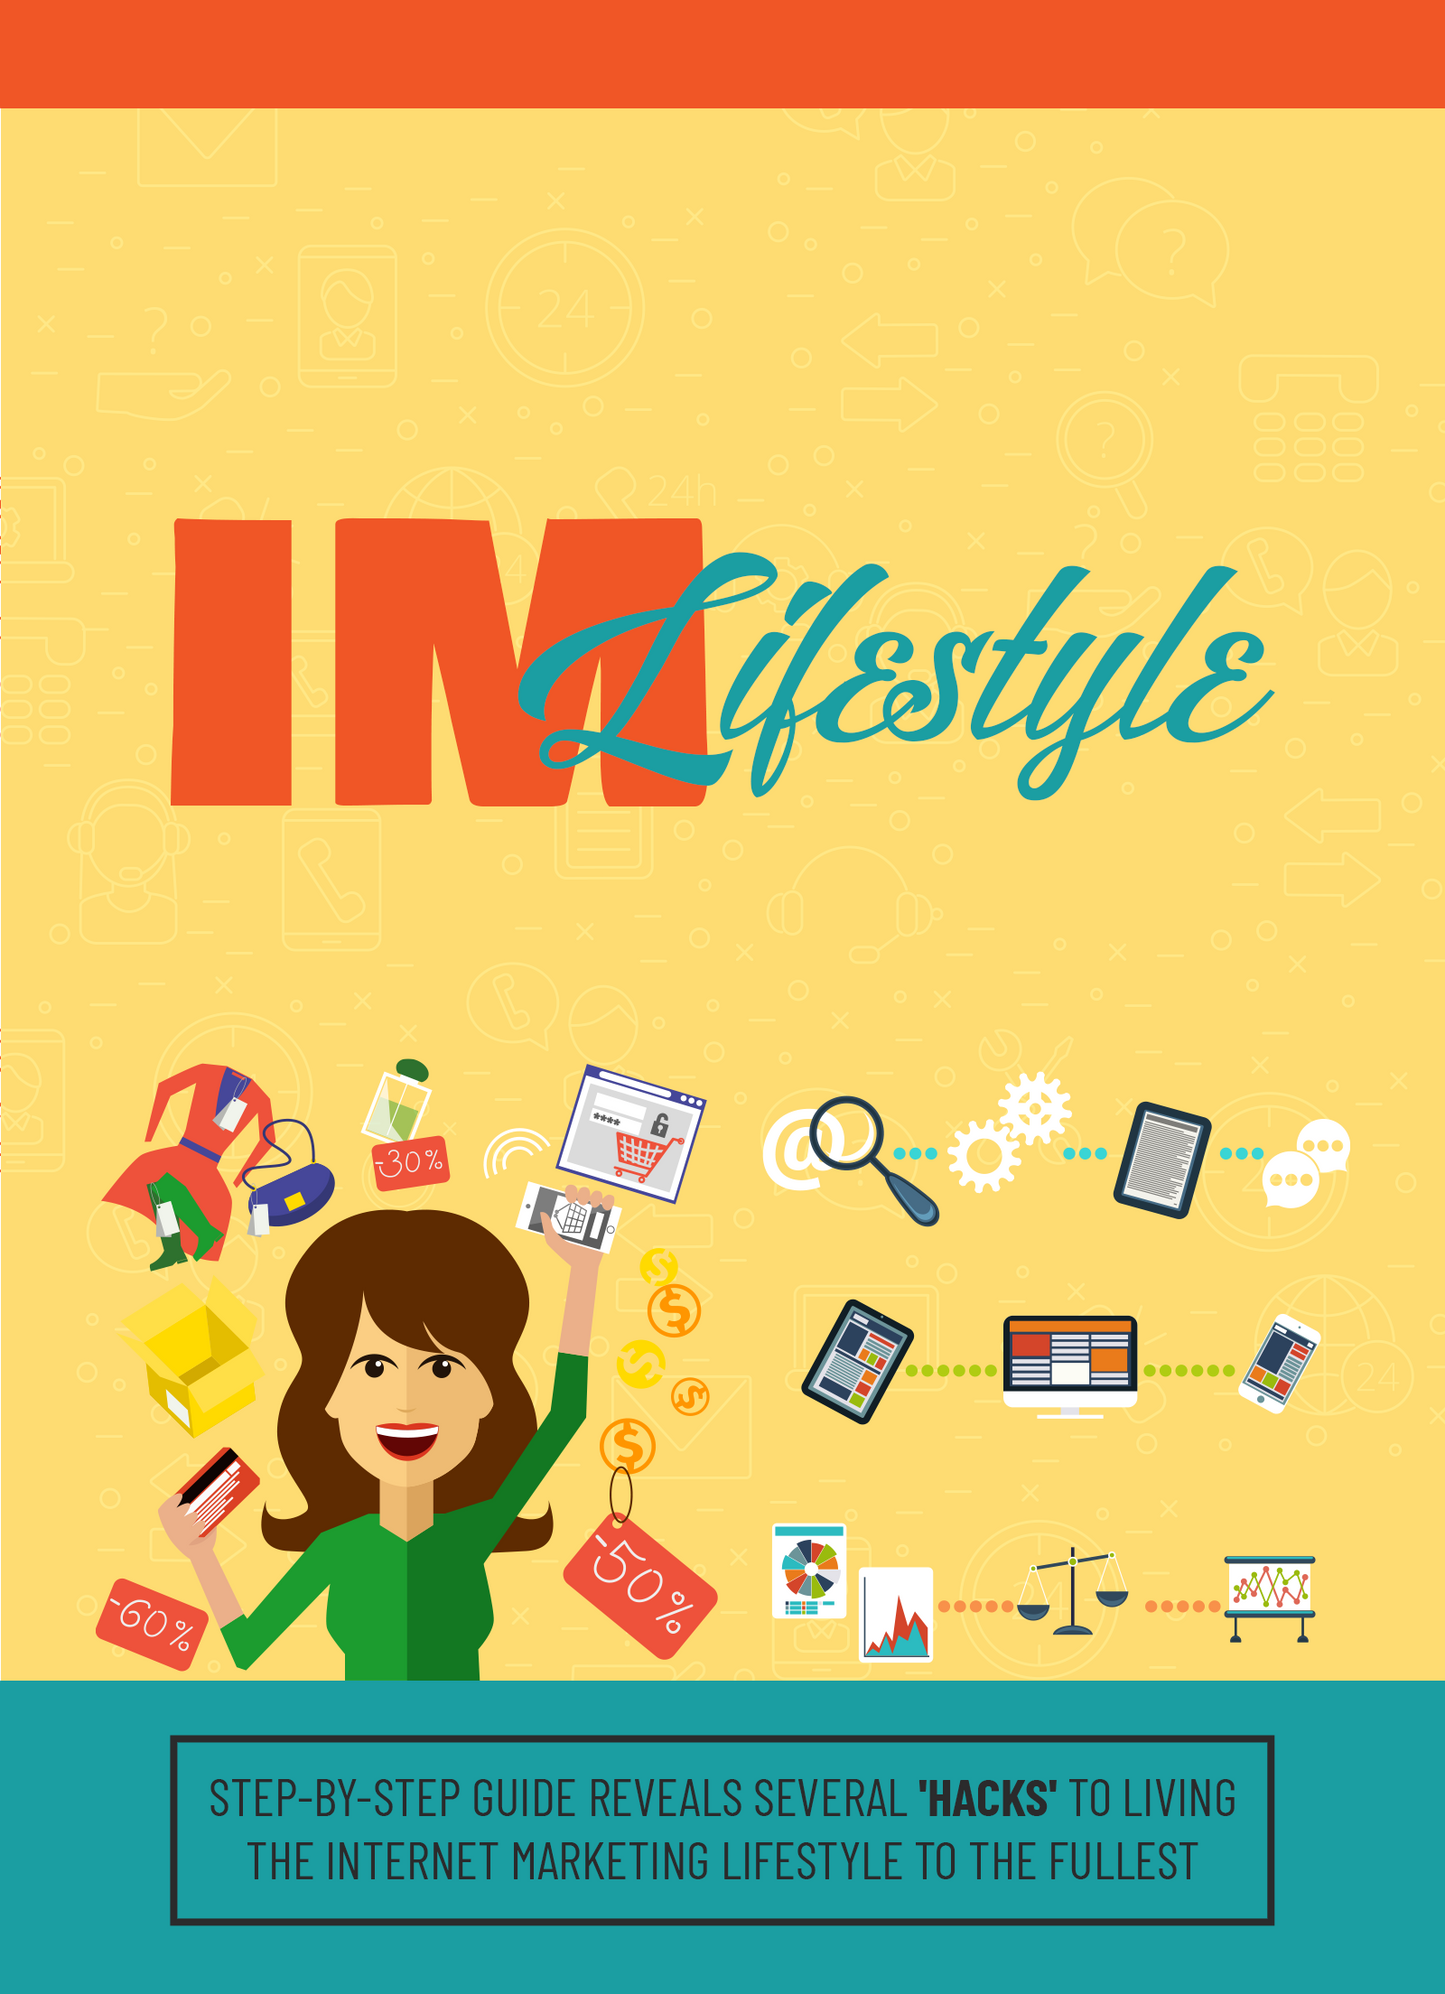 IM (Internet Marketing) Lifestyle